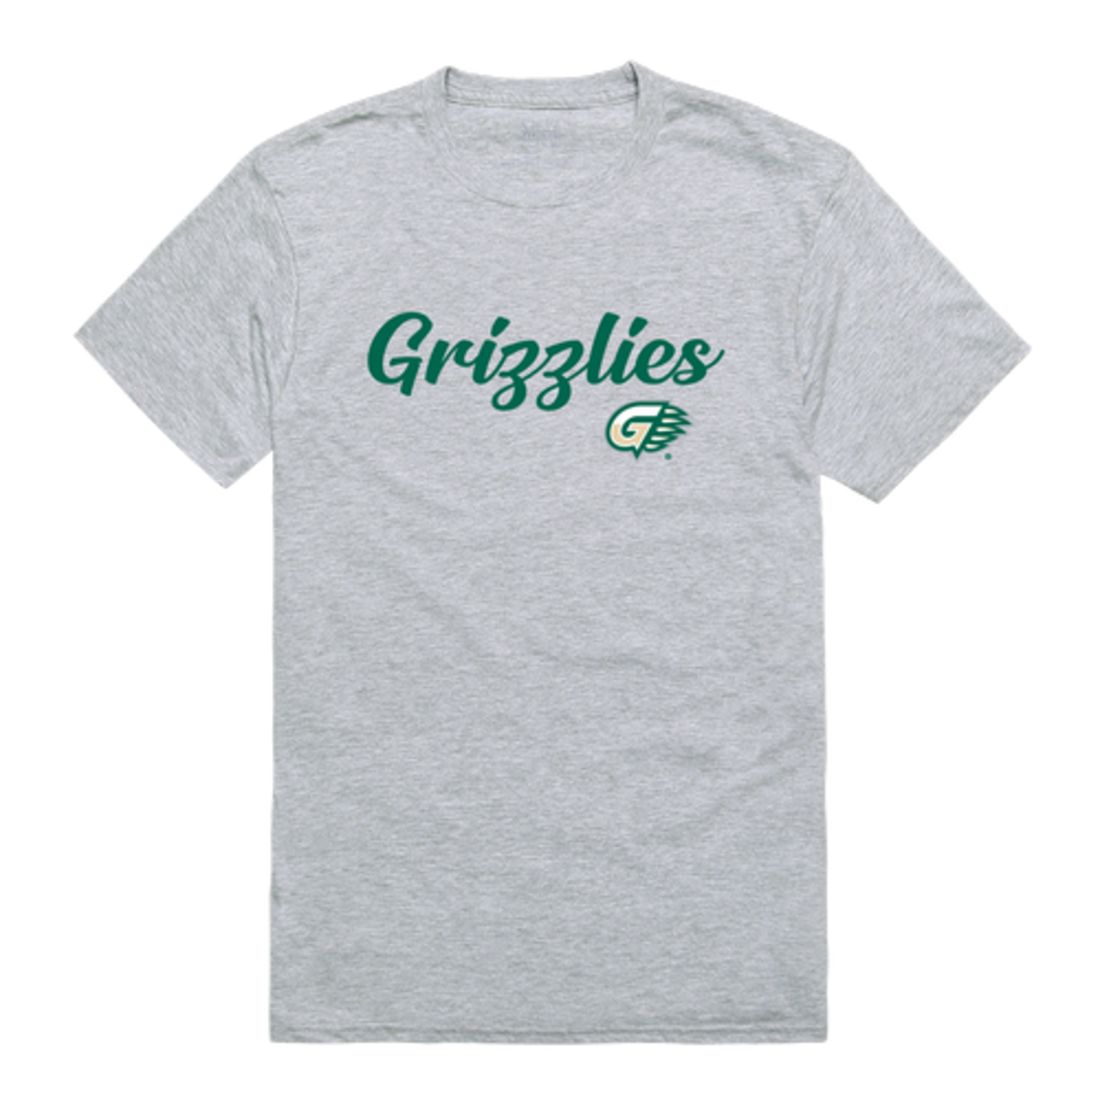 Georgia Gwinnett College Grizzlies Script T-Shirt Tee